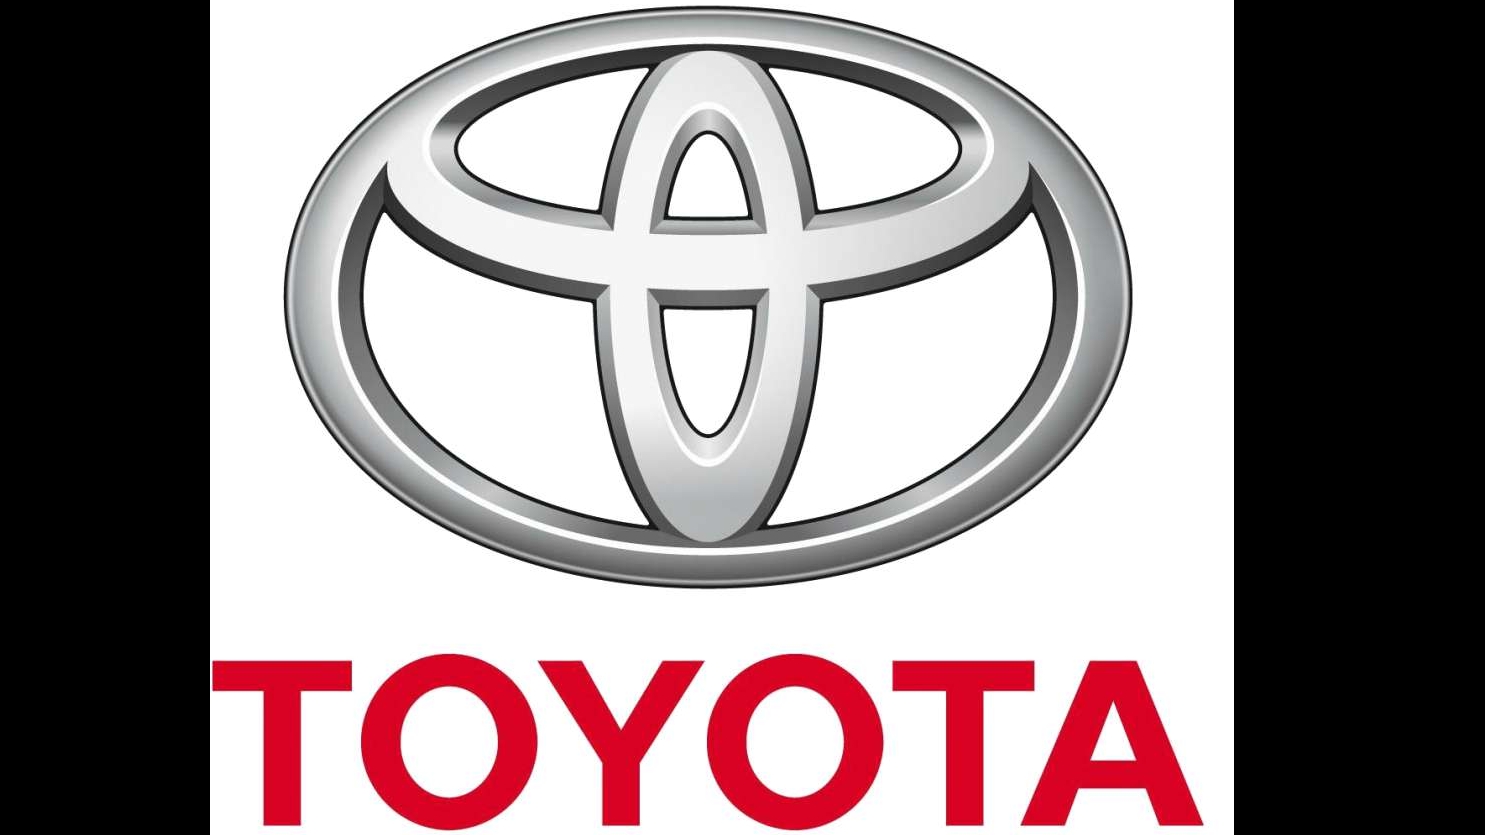 ToyotaHD